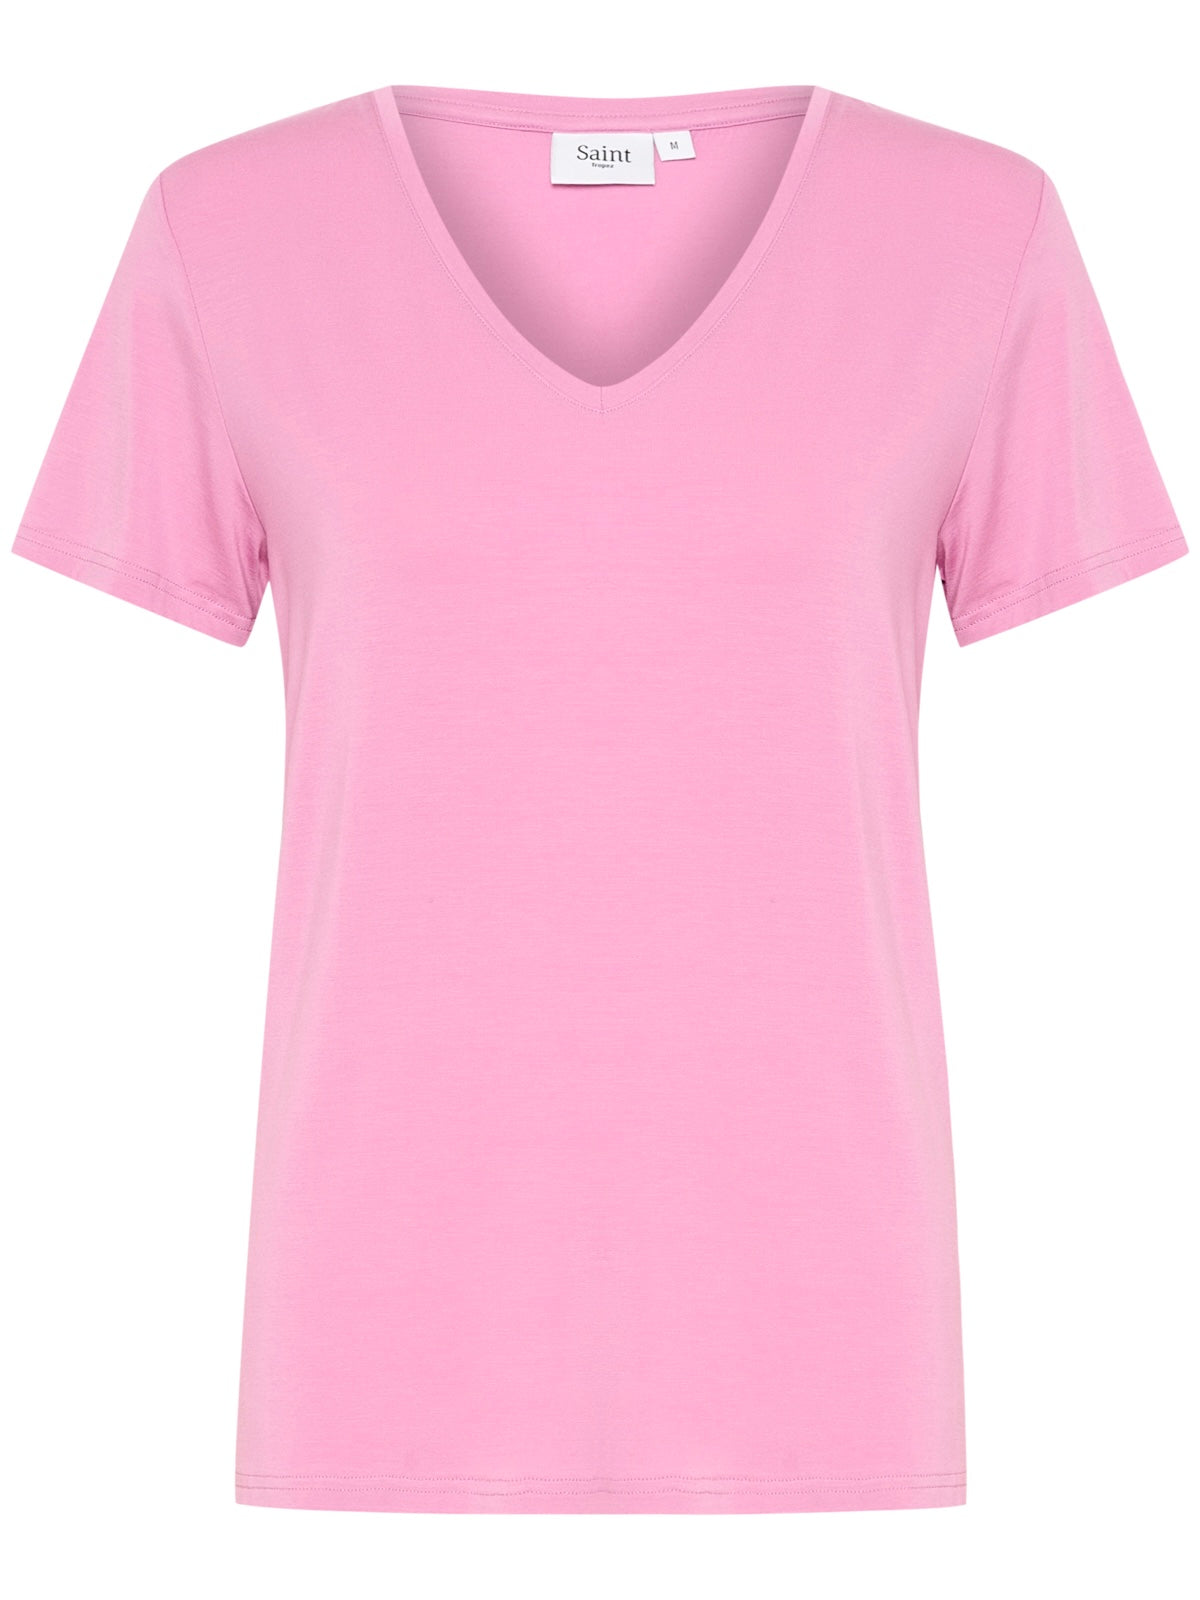 Jerseyshirt Adelia V-Ausschnitt, in mehreren Farben